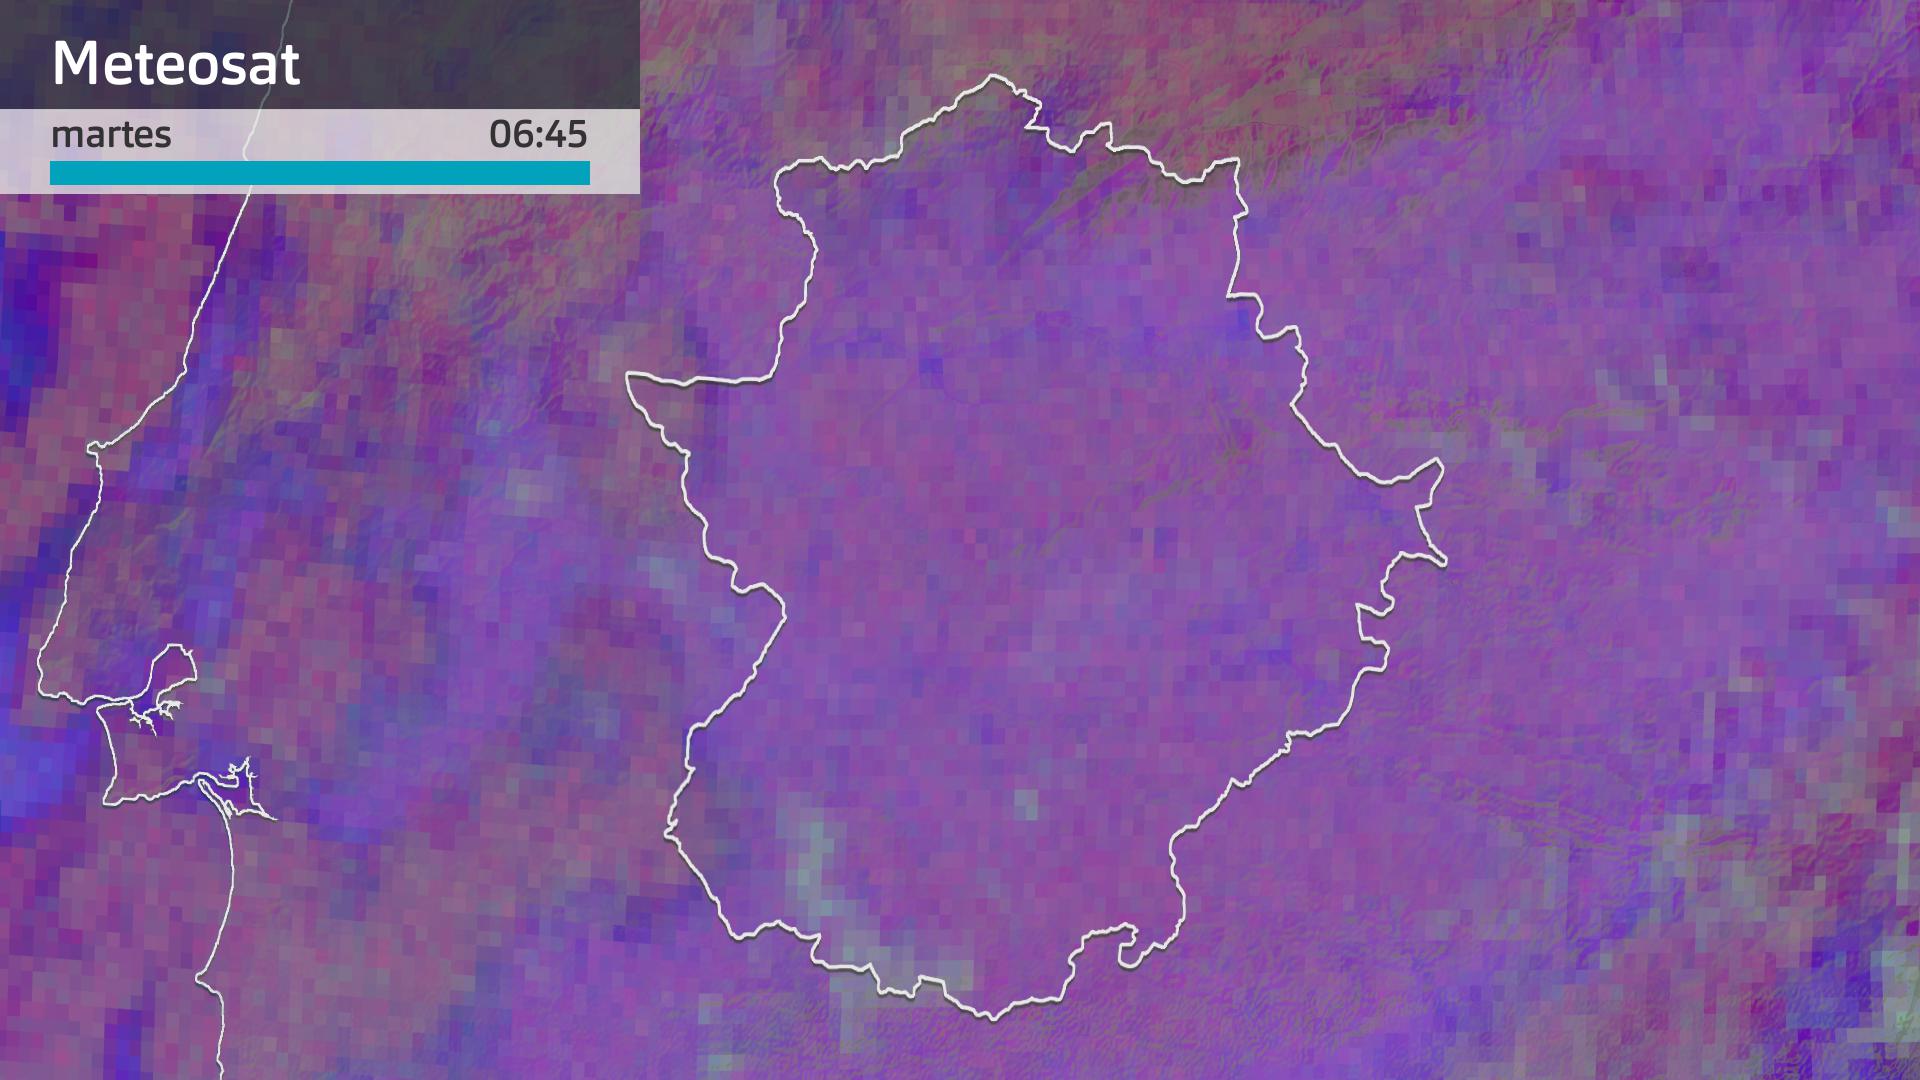 Imagen del Meteosat martes 14 de mayo 6:45 h.